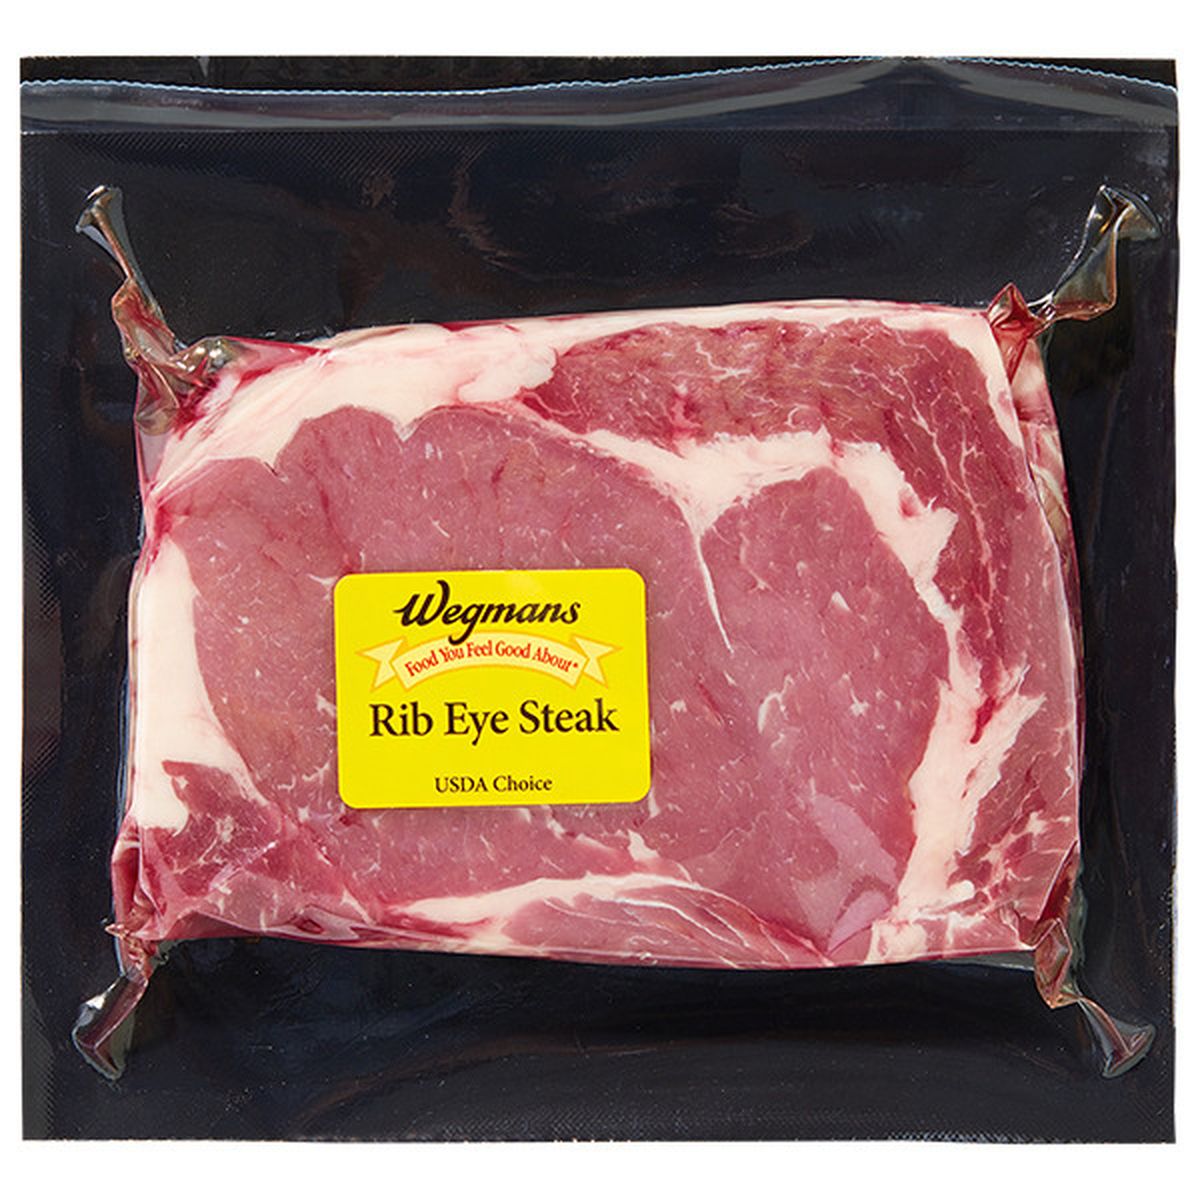 Calories in Wegmans Choice Rib Eye Steak